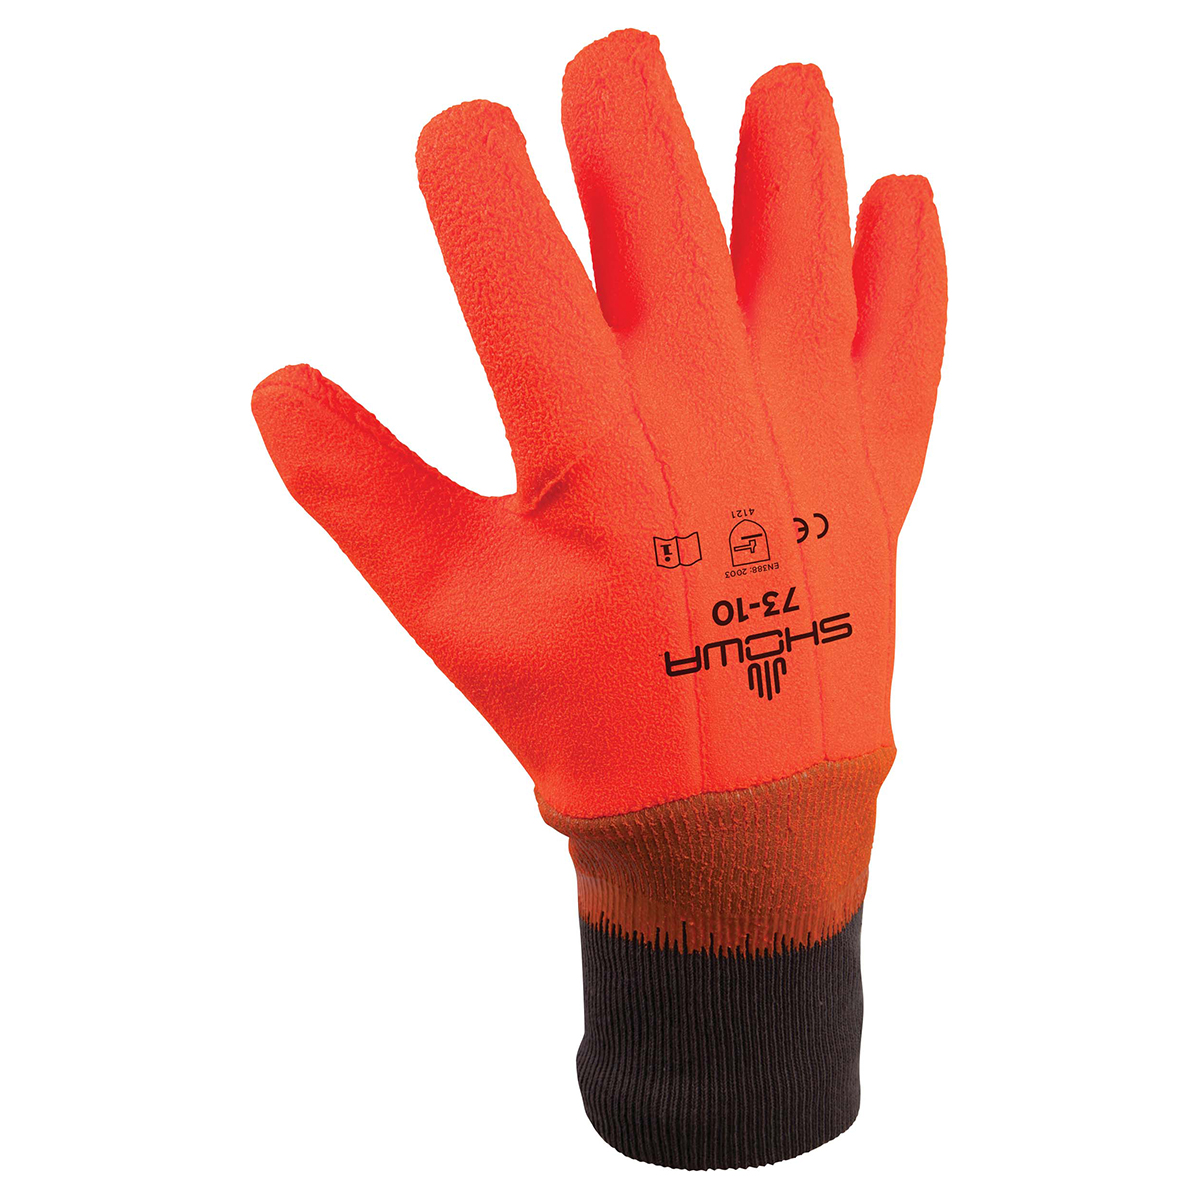 Insulated PVC fully coated vinyl, knit wrist, wrinkle finish, safety orange, large - Chemical Resistant